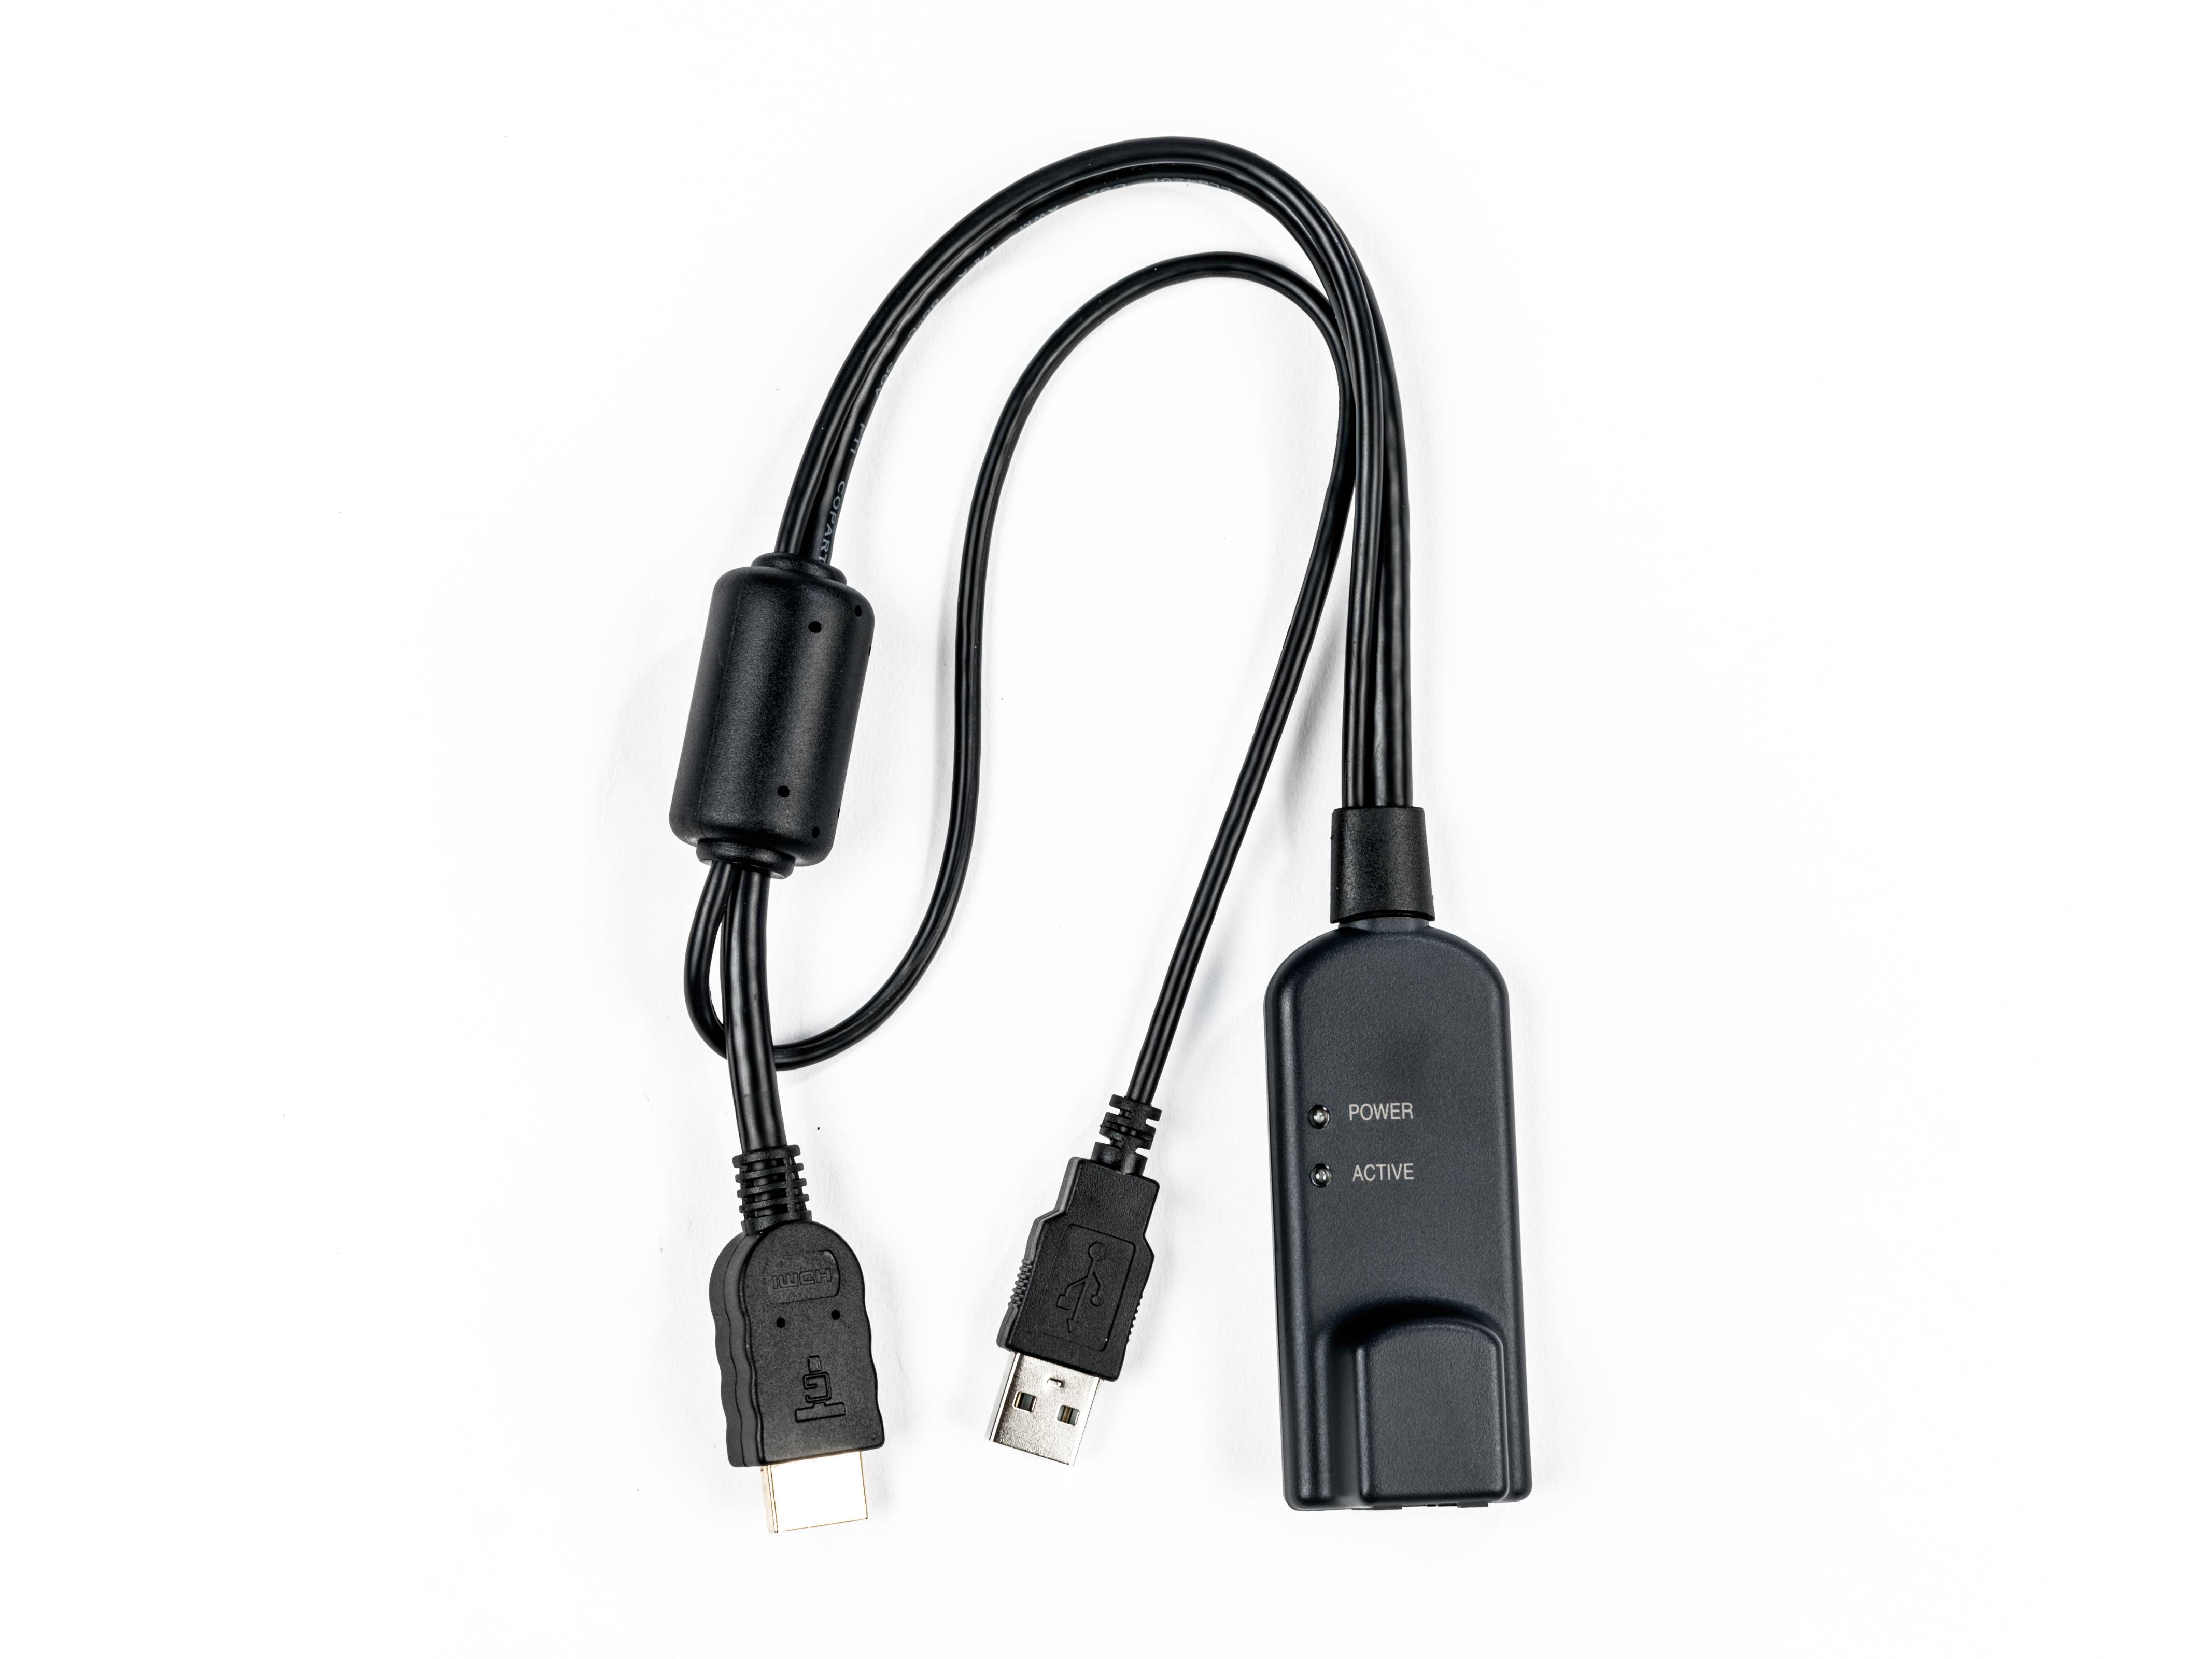 Rca Informatique - Image du produit : SERVERINTERFACEMODULE/HDMI USBKEYBOARD/MOUSE